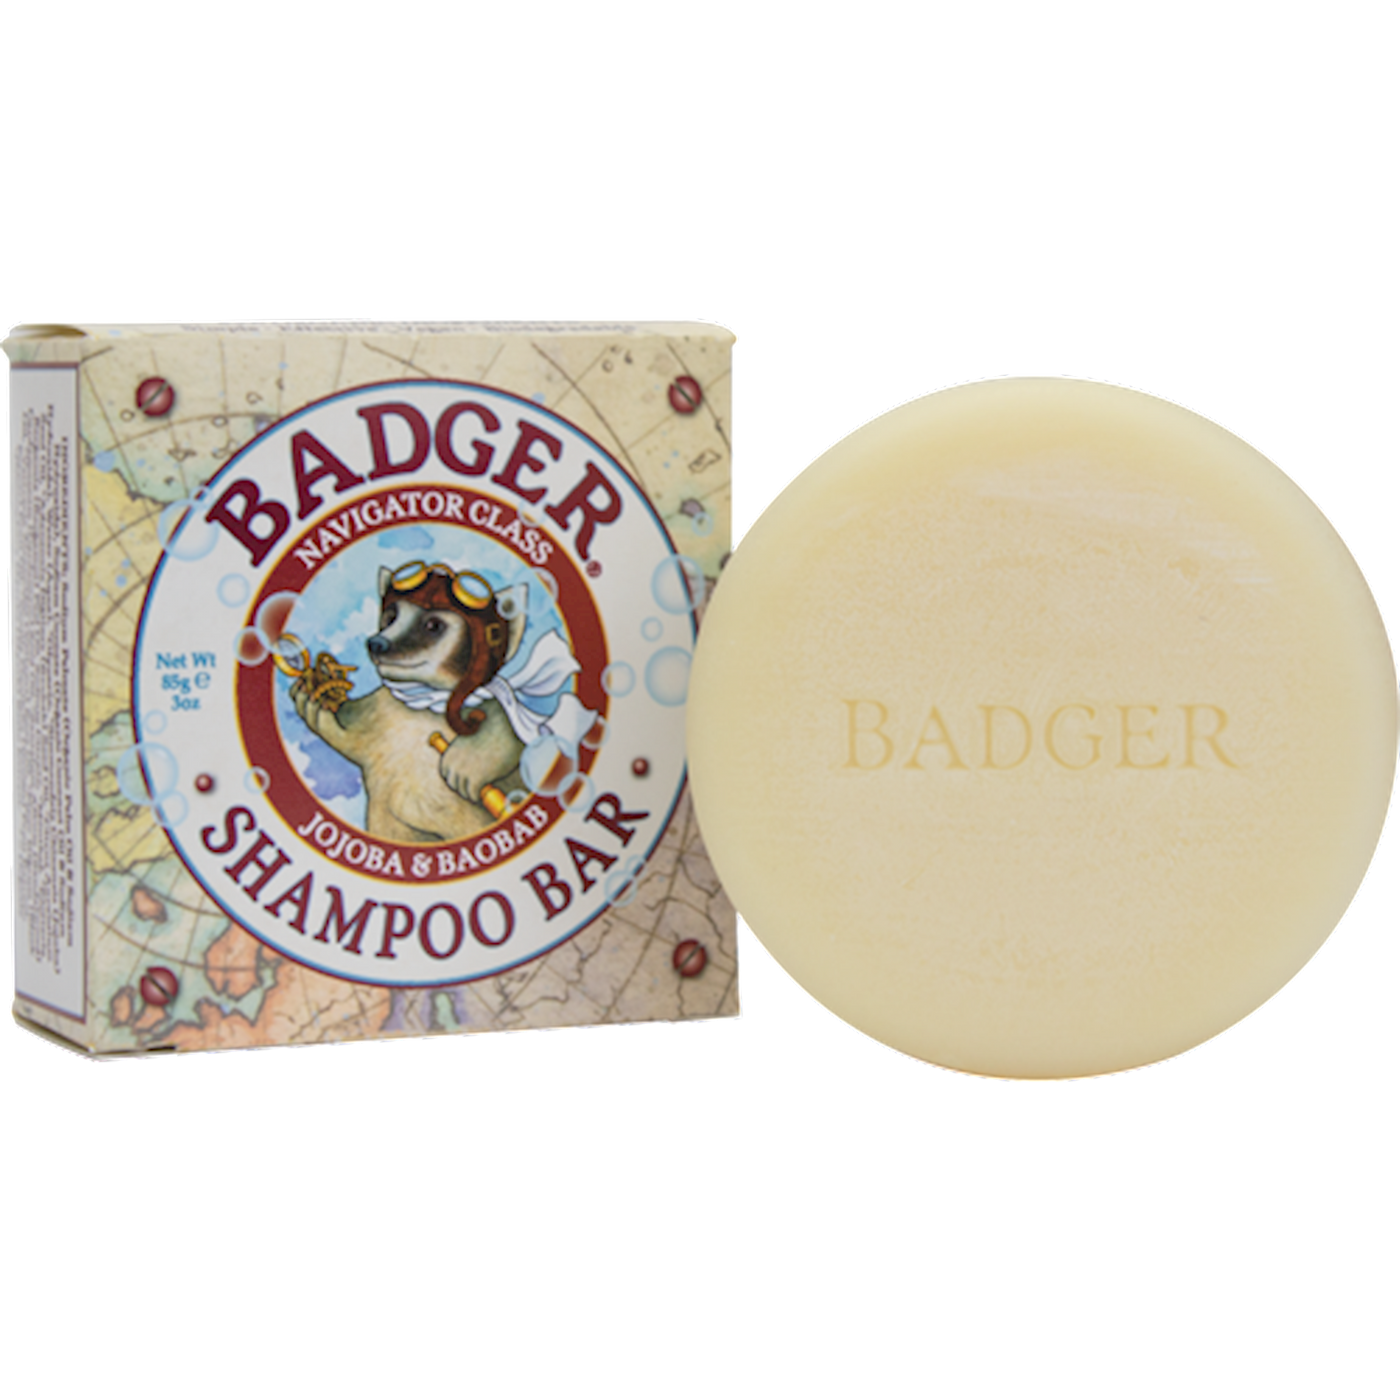 Badger Shampoo Bar 3 oz Curated Wellness